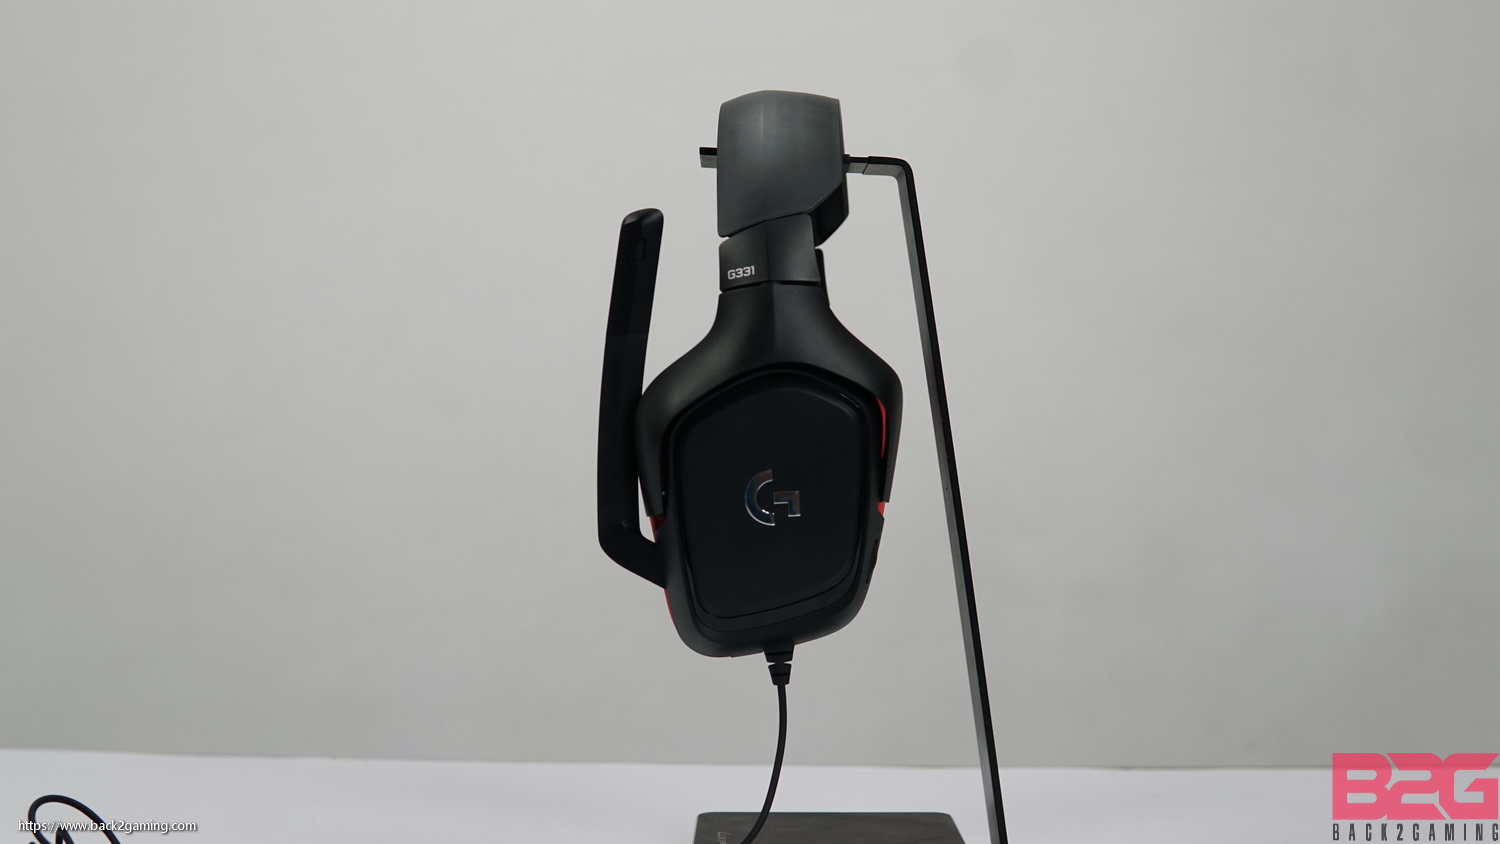 Logitech G331 Gaming Headset Review: Is this a Good Starter Headset? - Logitech G331